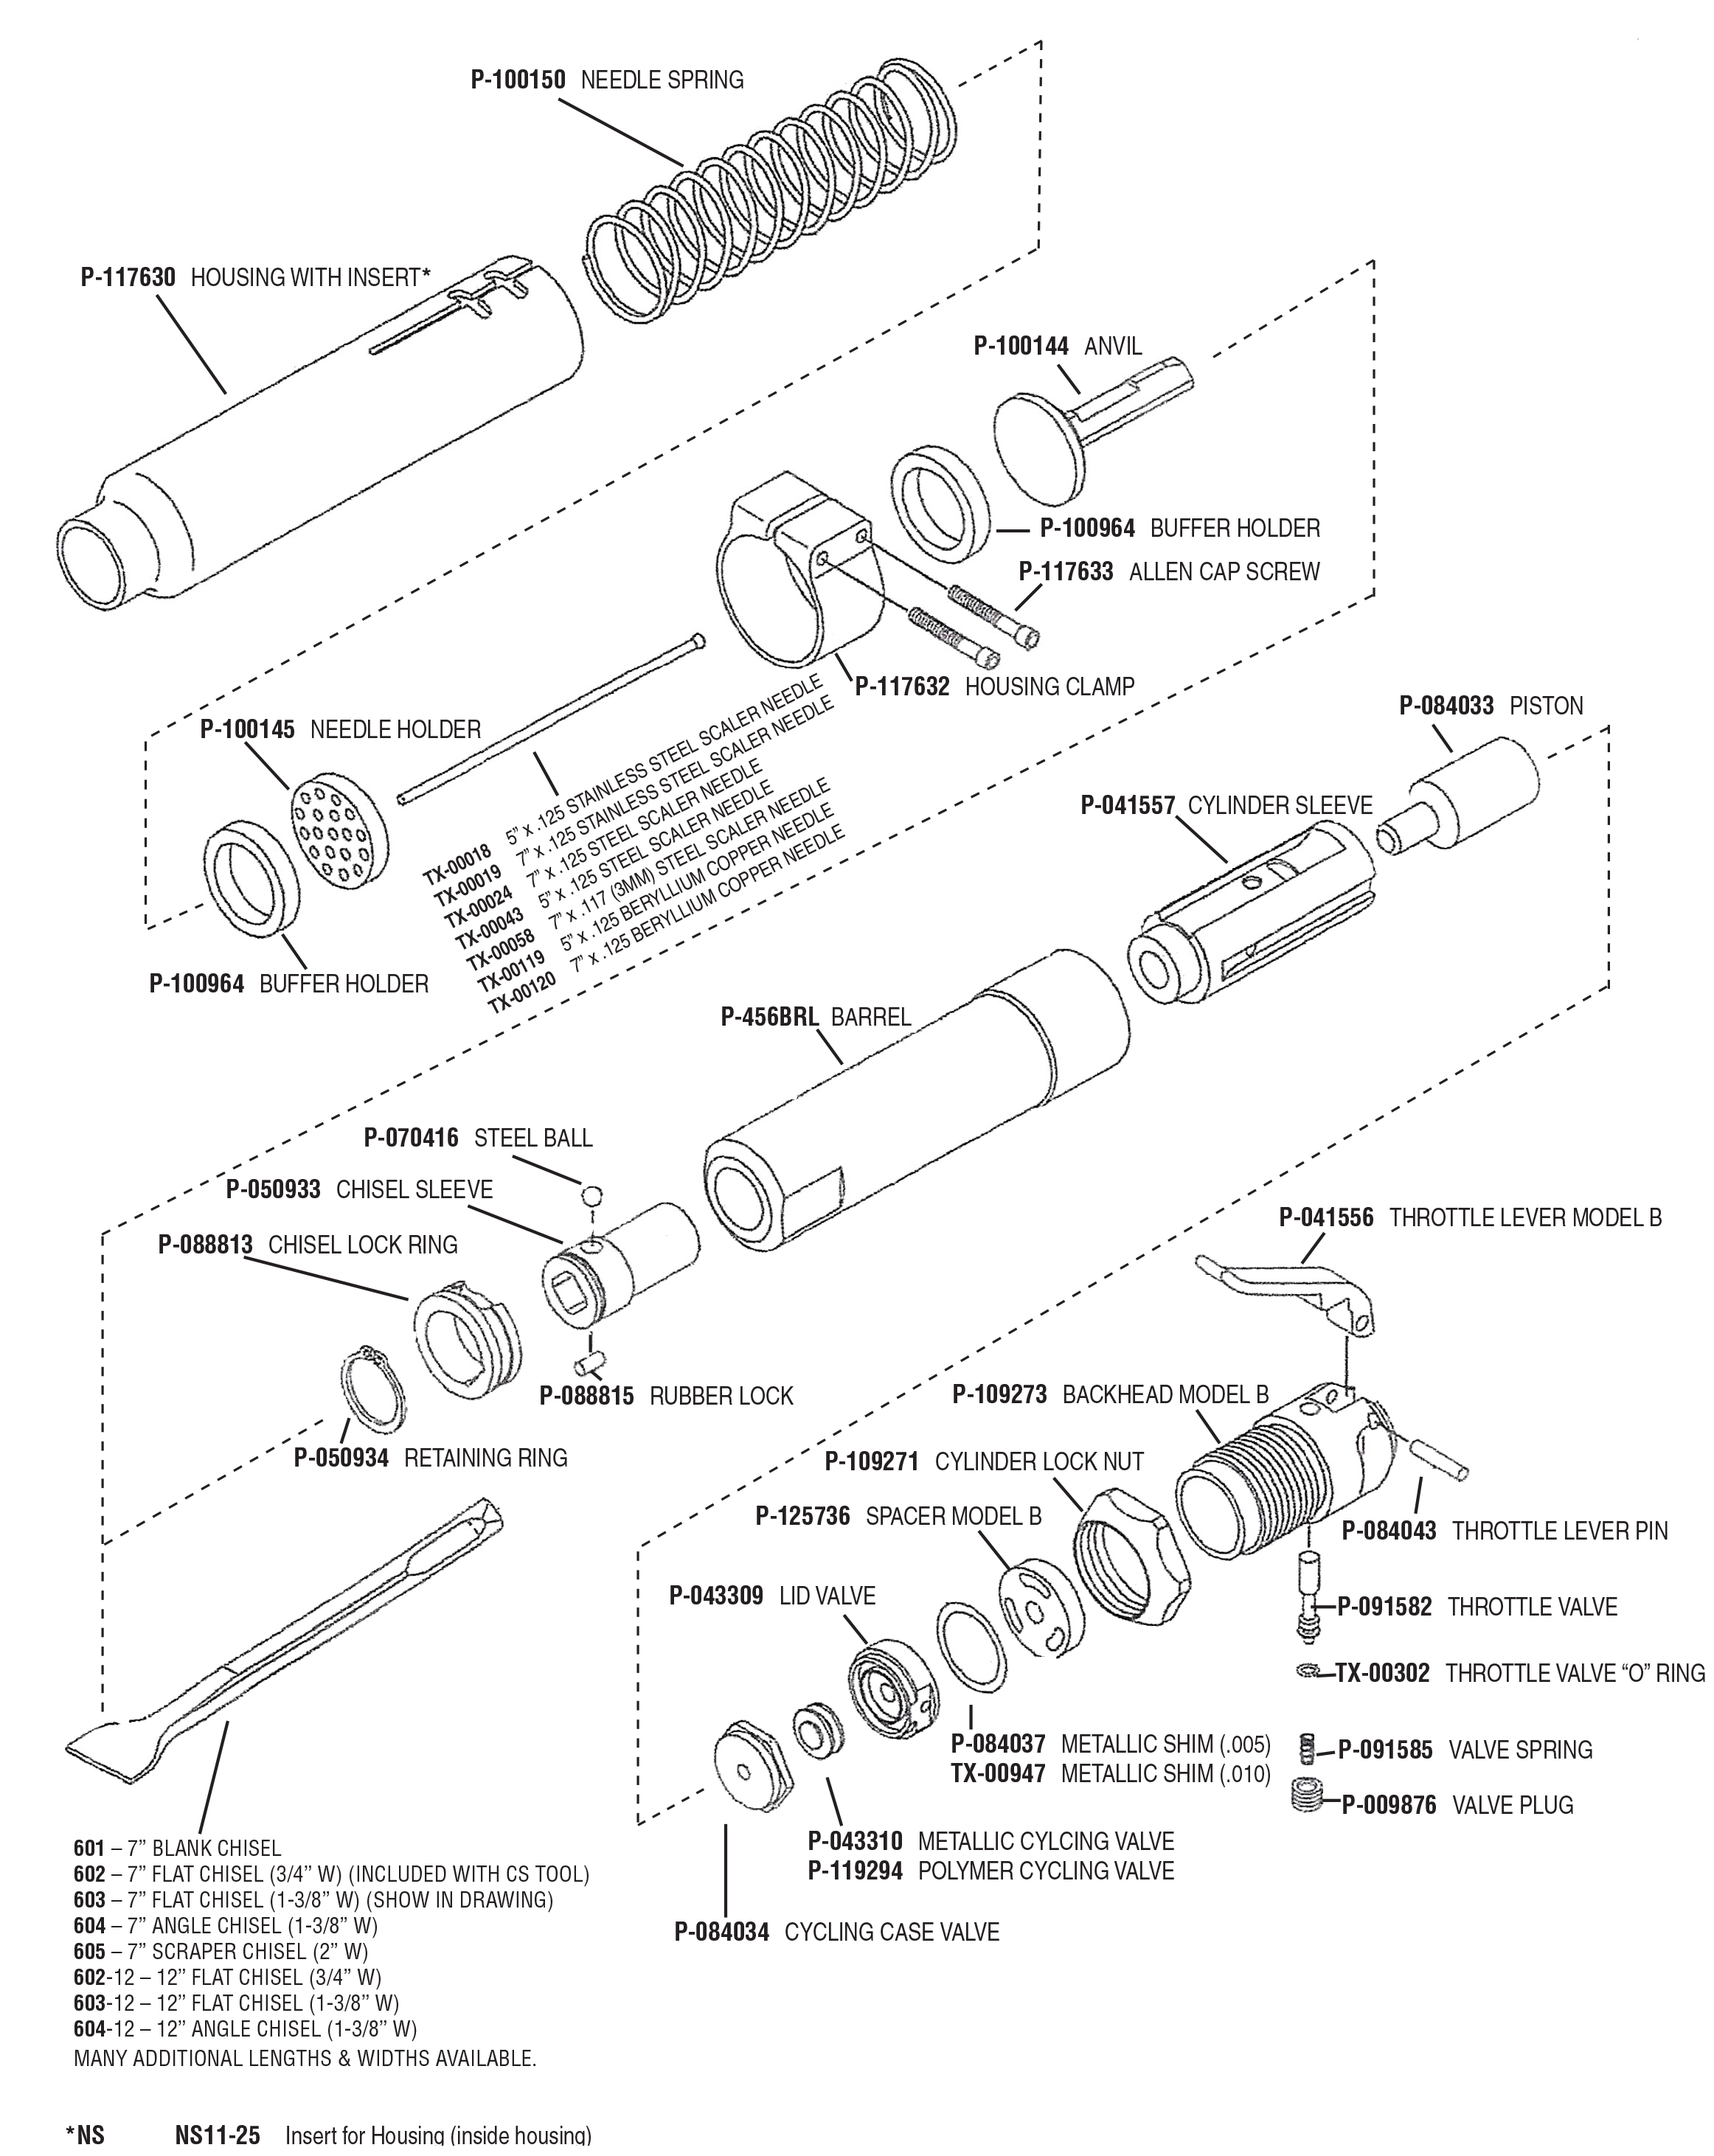 TX456-NS & TX456-CS Schematic & Replacement Parts for Texas Pneumatic Tools - TX456-NS & TX456-CS - Needle / Chisel Scaler